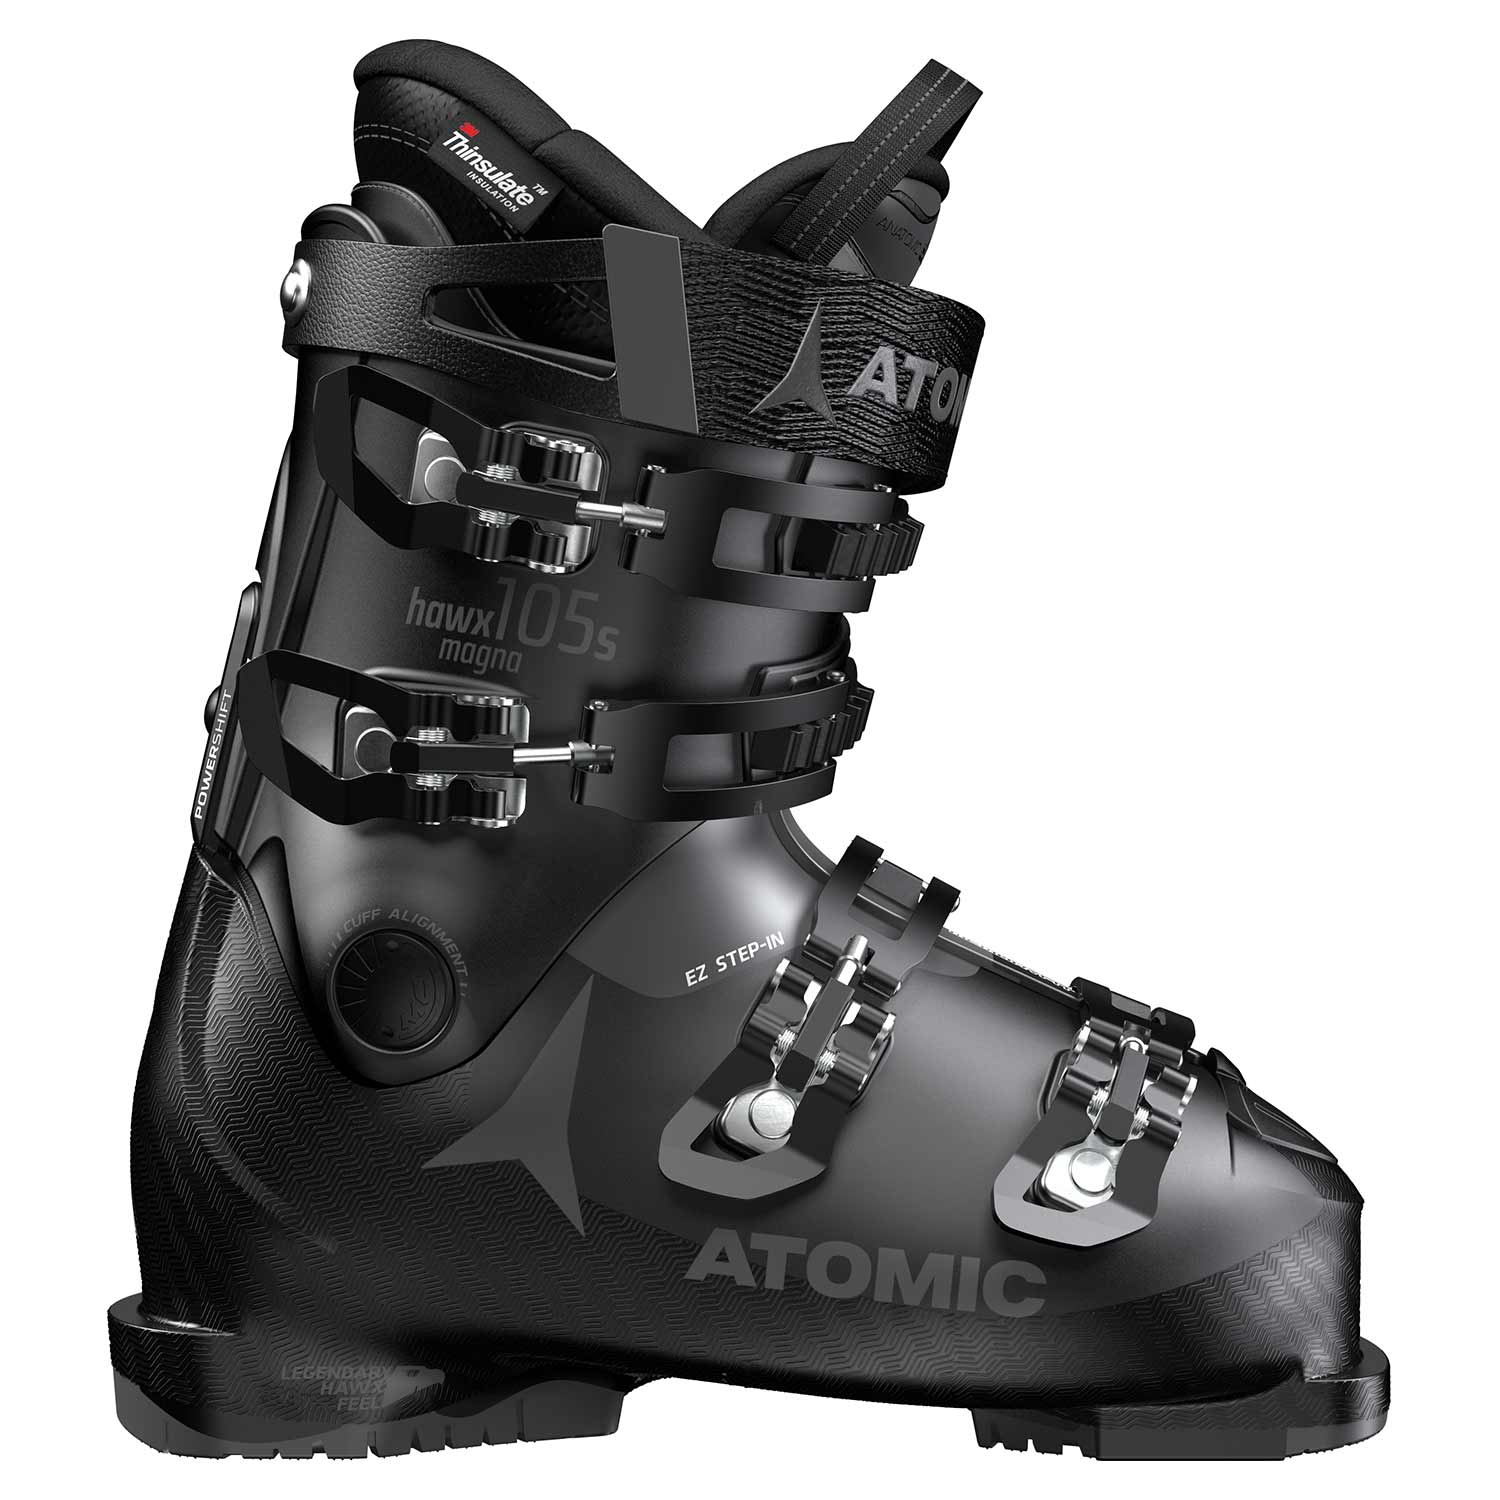 Clearance Ski Boots Cheap Ski Boots Ski boots sale uk Snowtrax